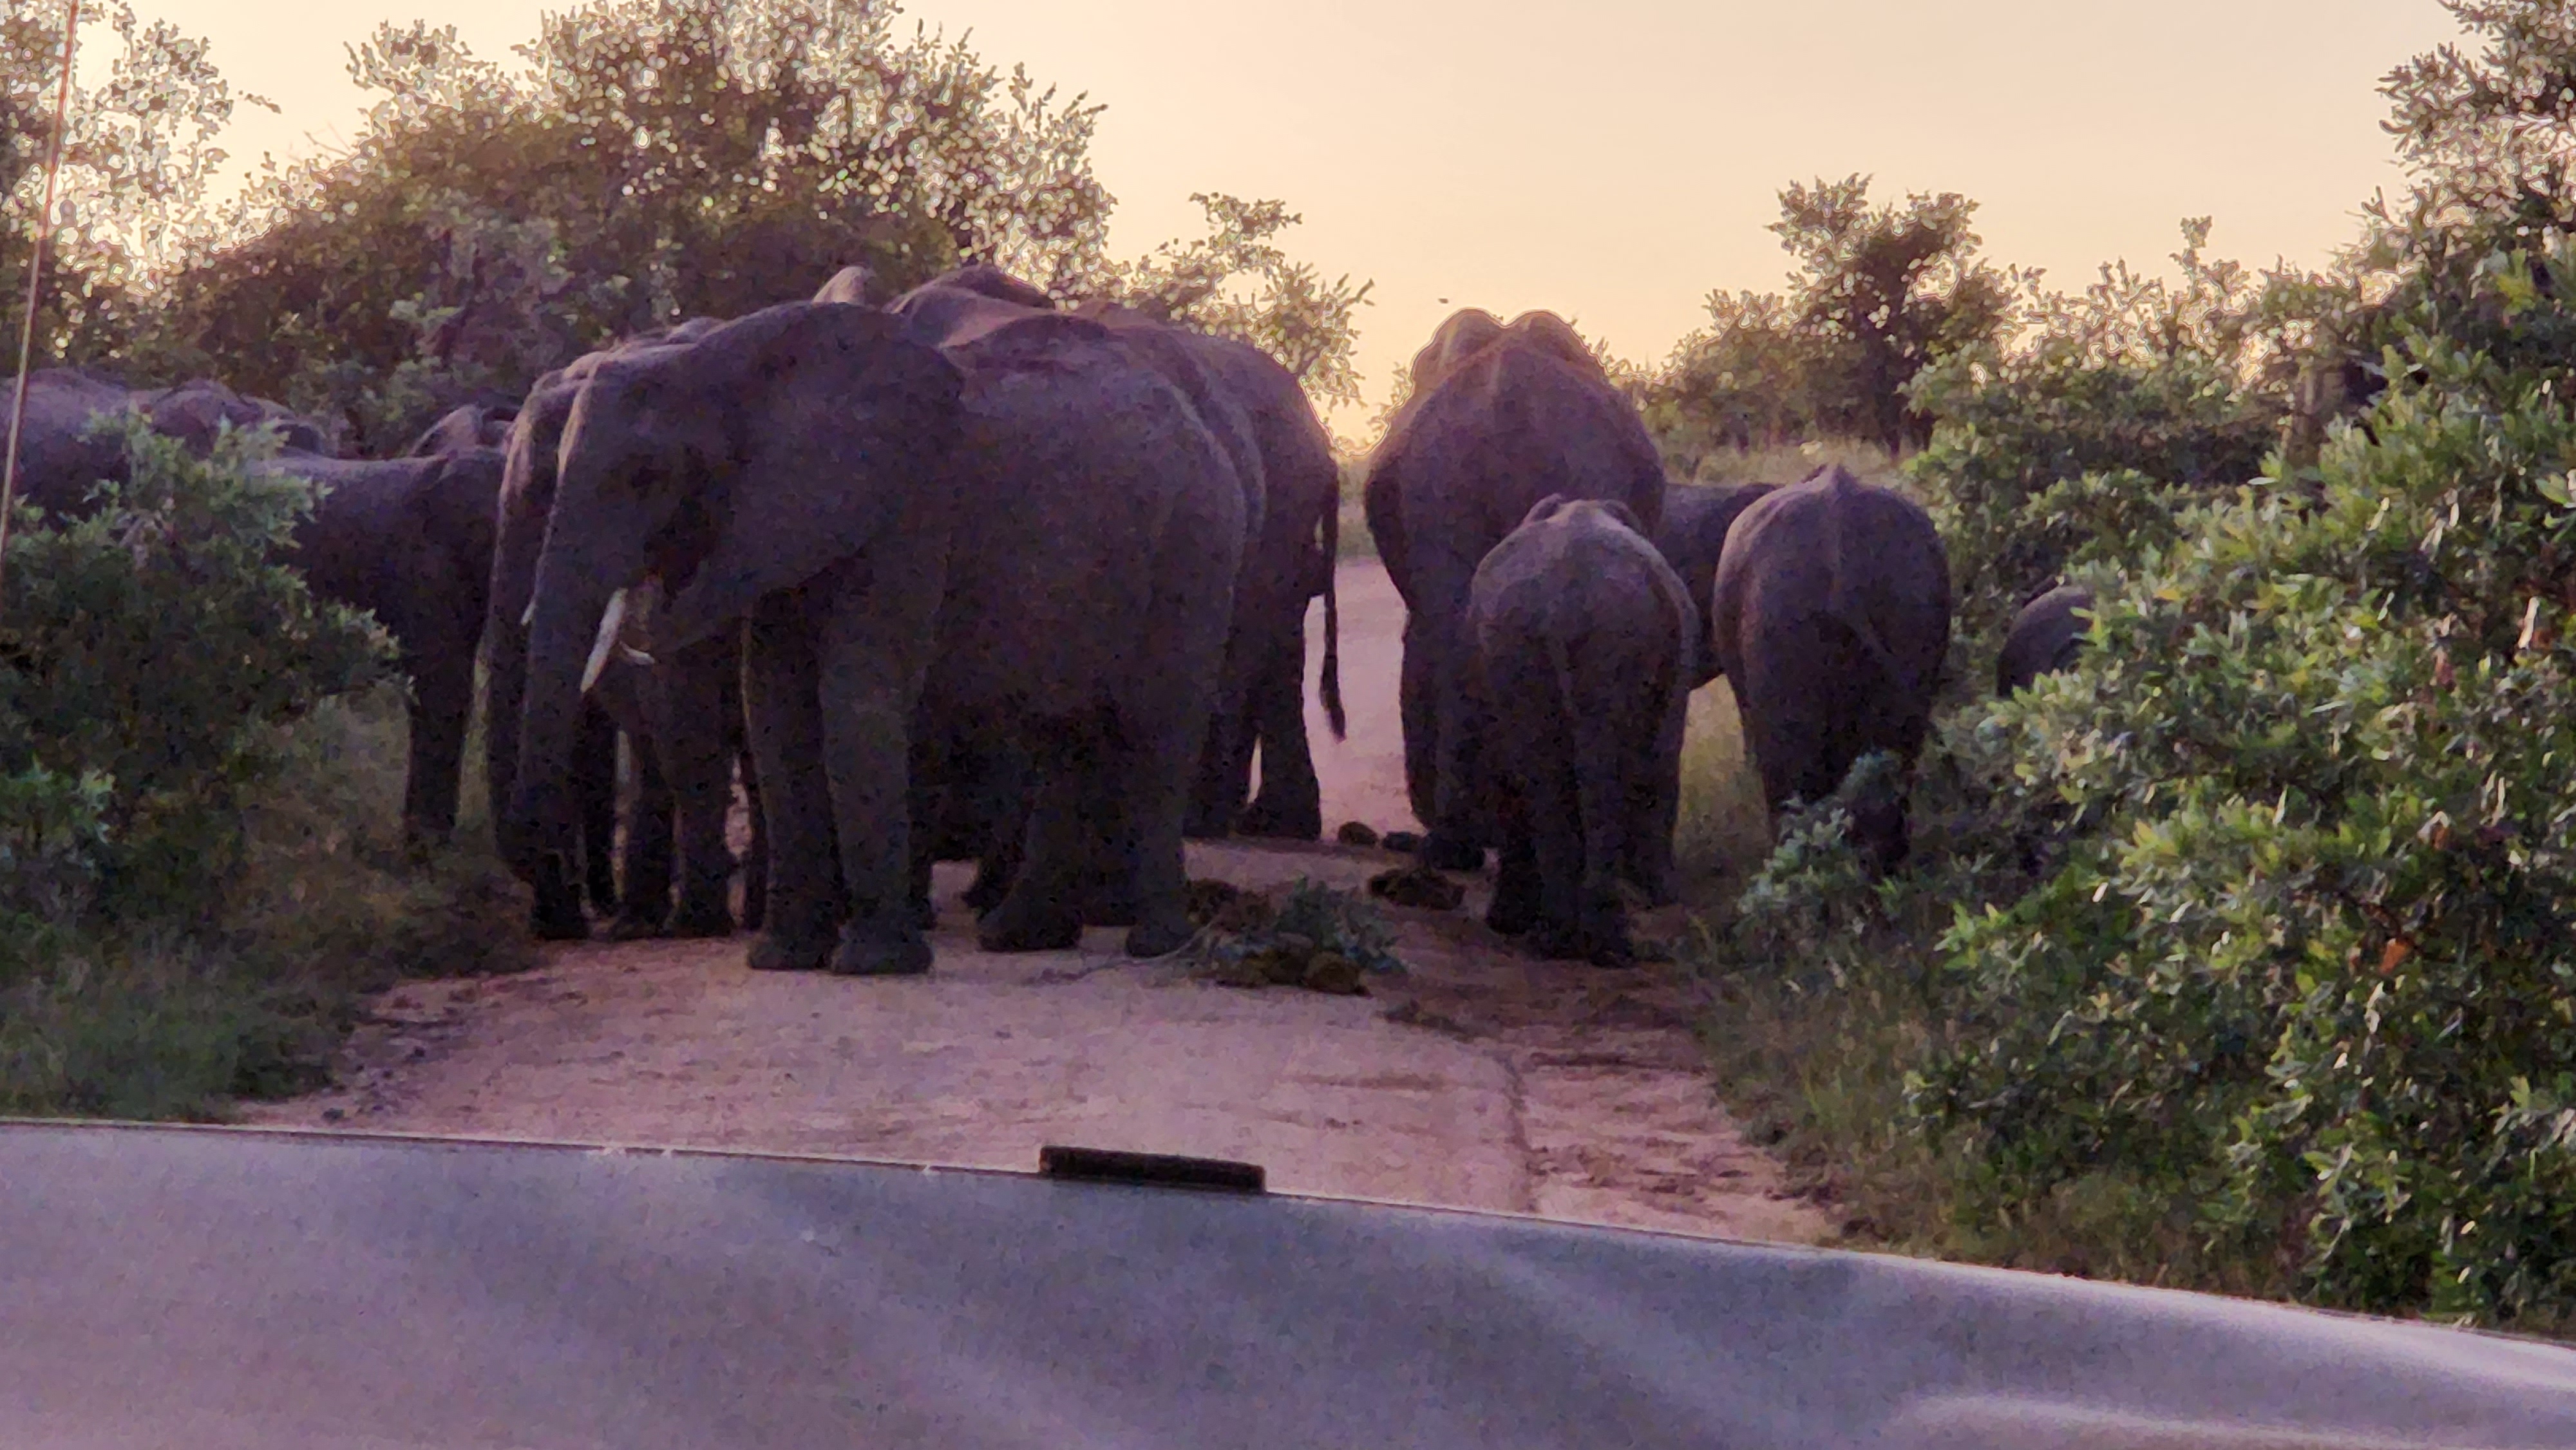 A herd of elephants. Photo by Karen Drake-Whitney.